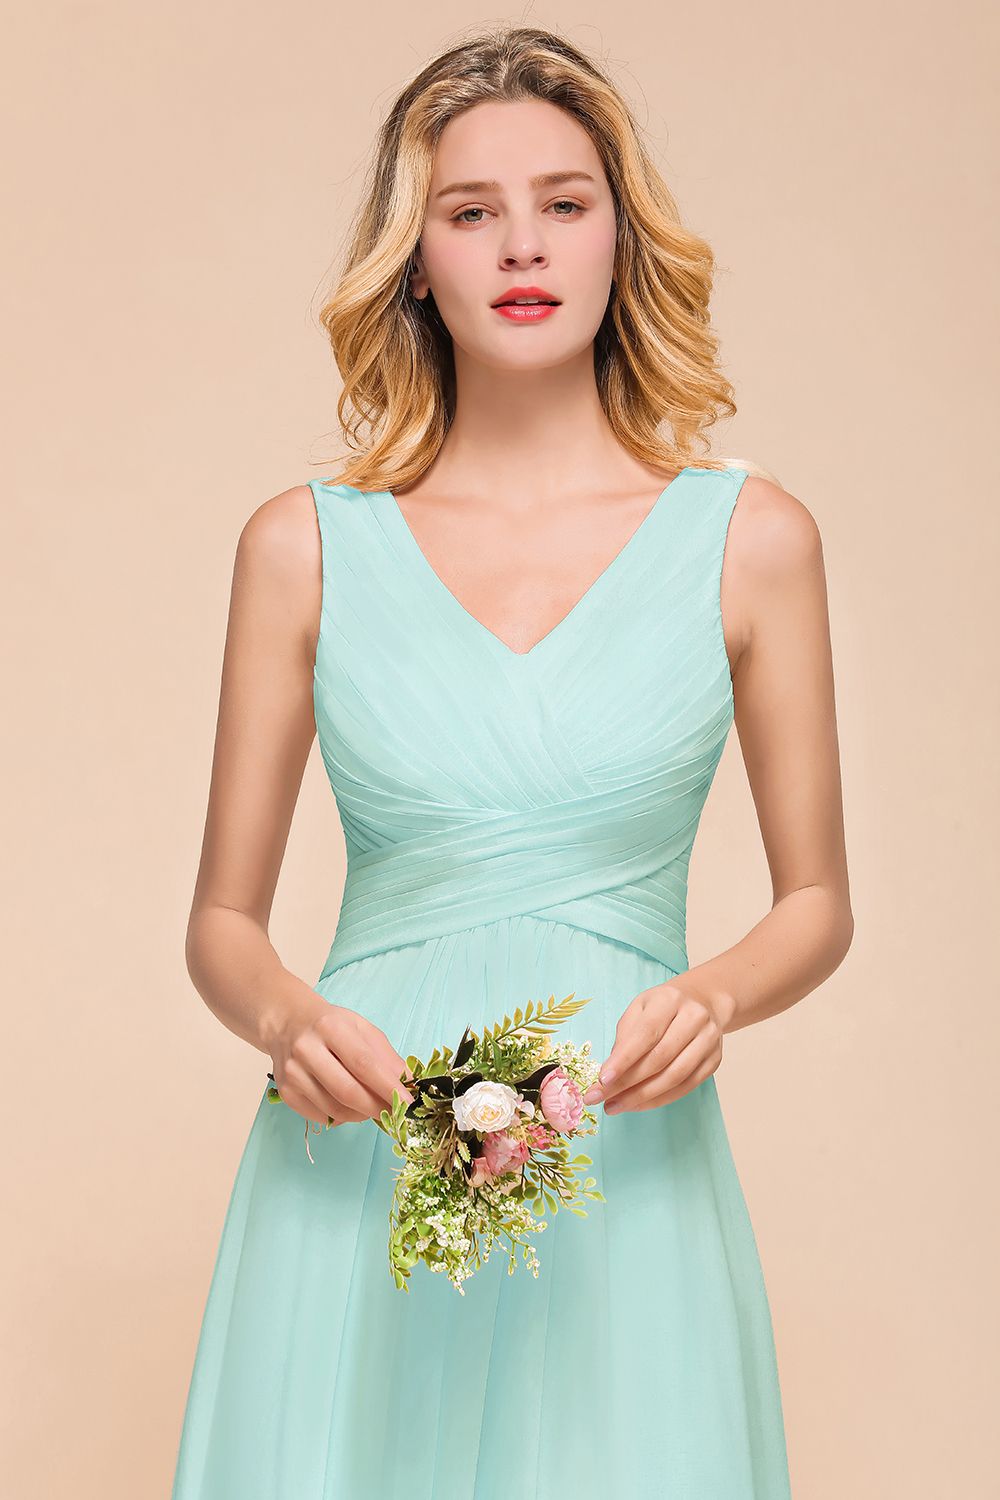 Bestellen Sie Mint Grün Brautjungfernkleider Lang online bei babyonlinedress.de. Günstiges Brautjungfernkleid aus Chiffon maß geschneidert bekommen.